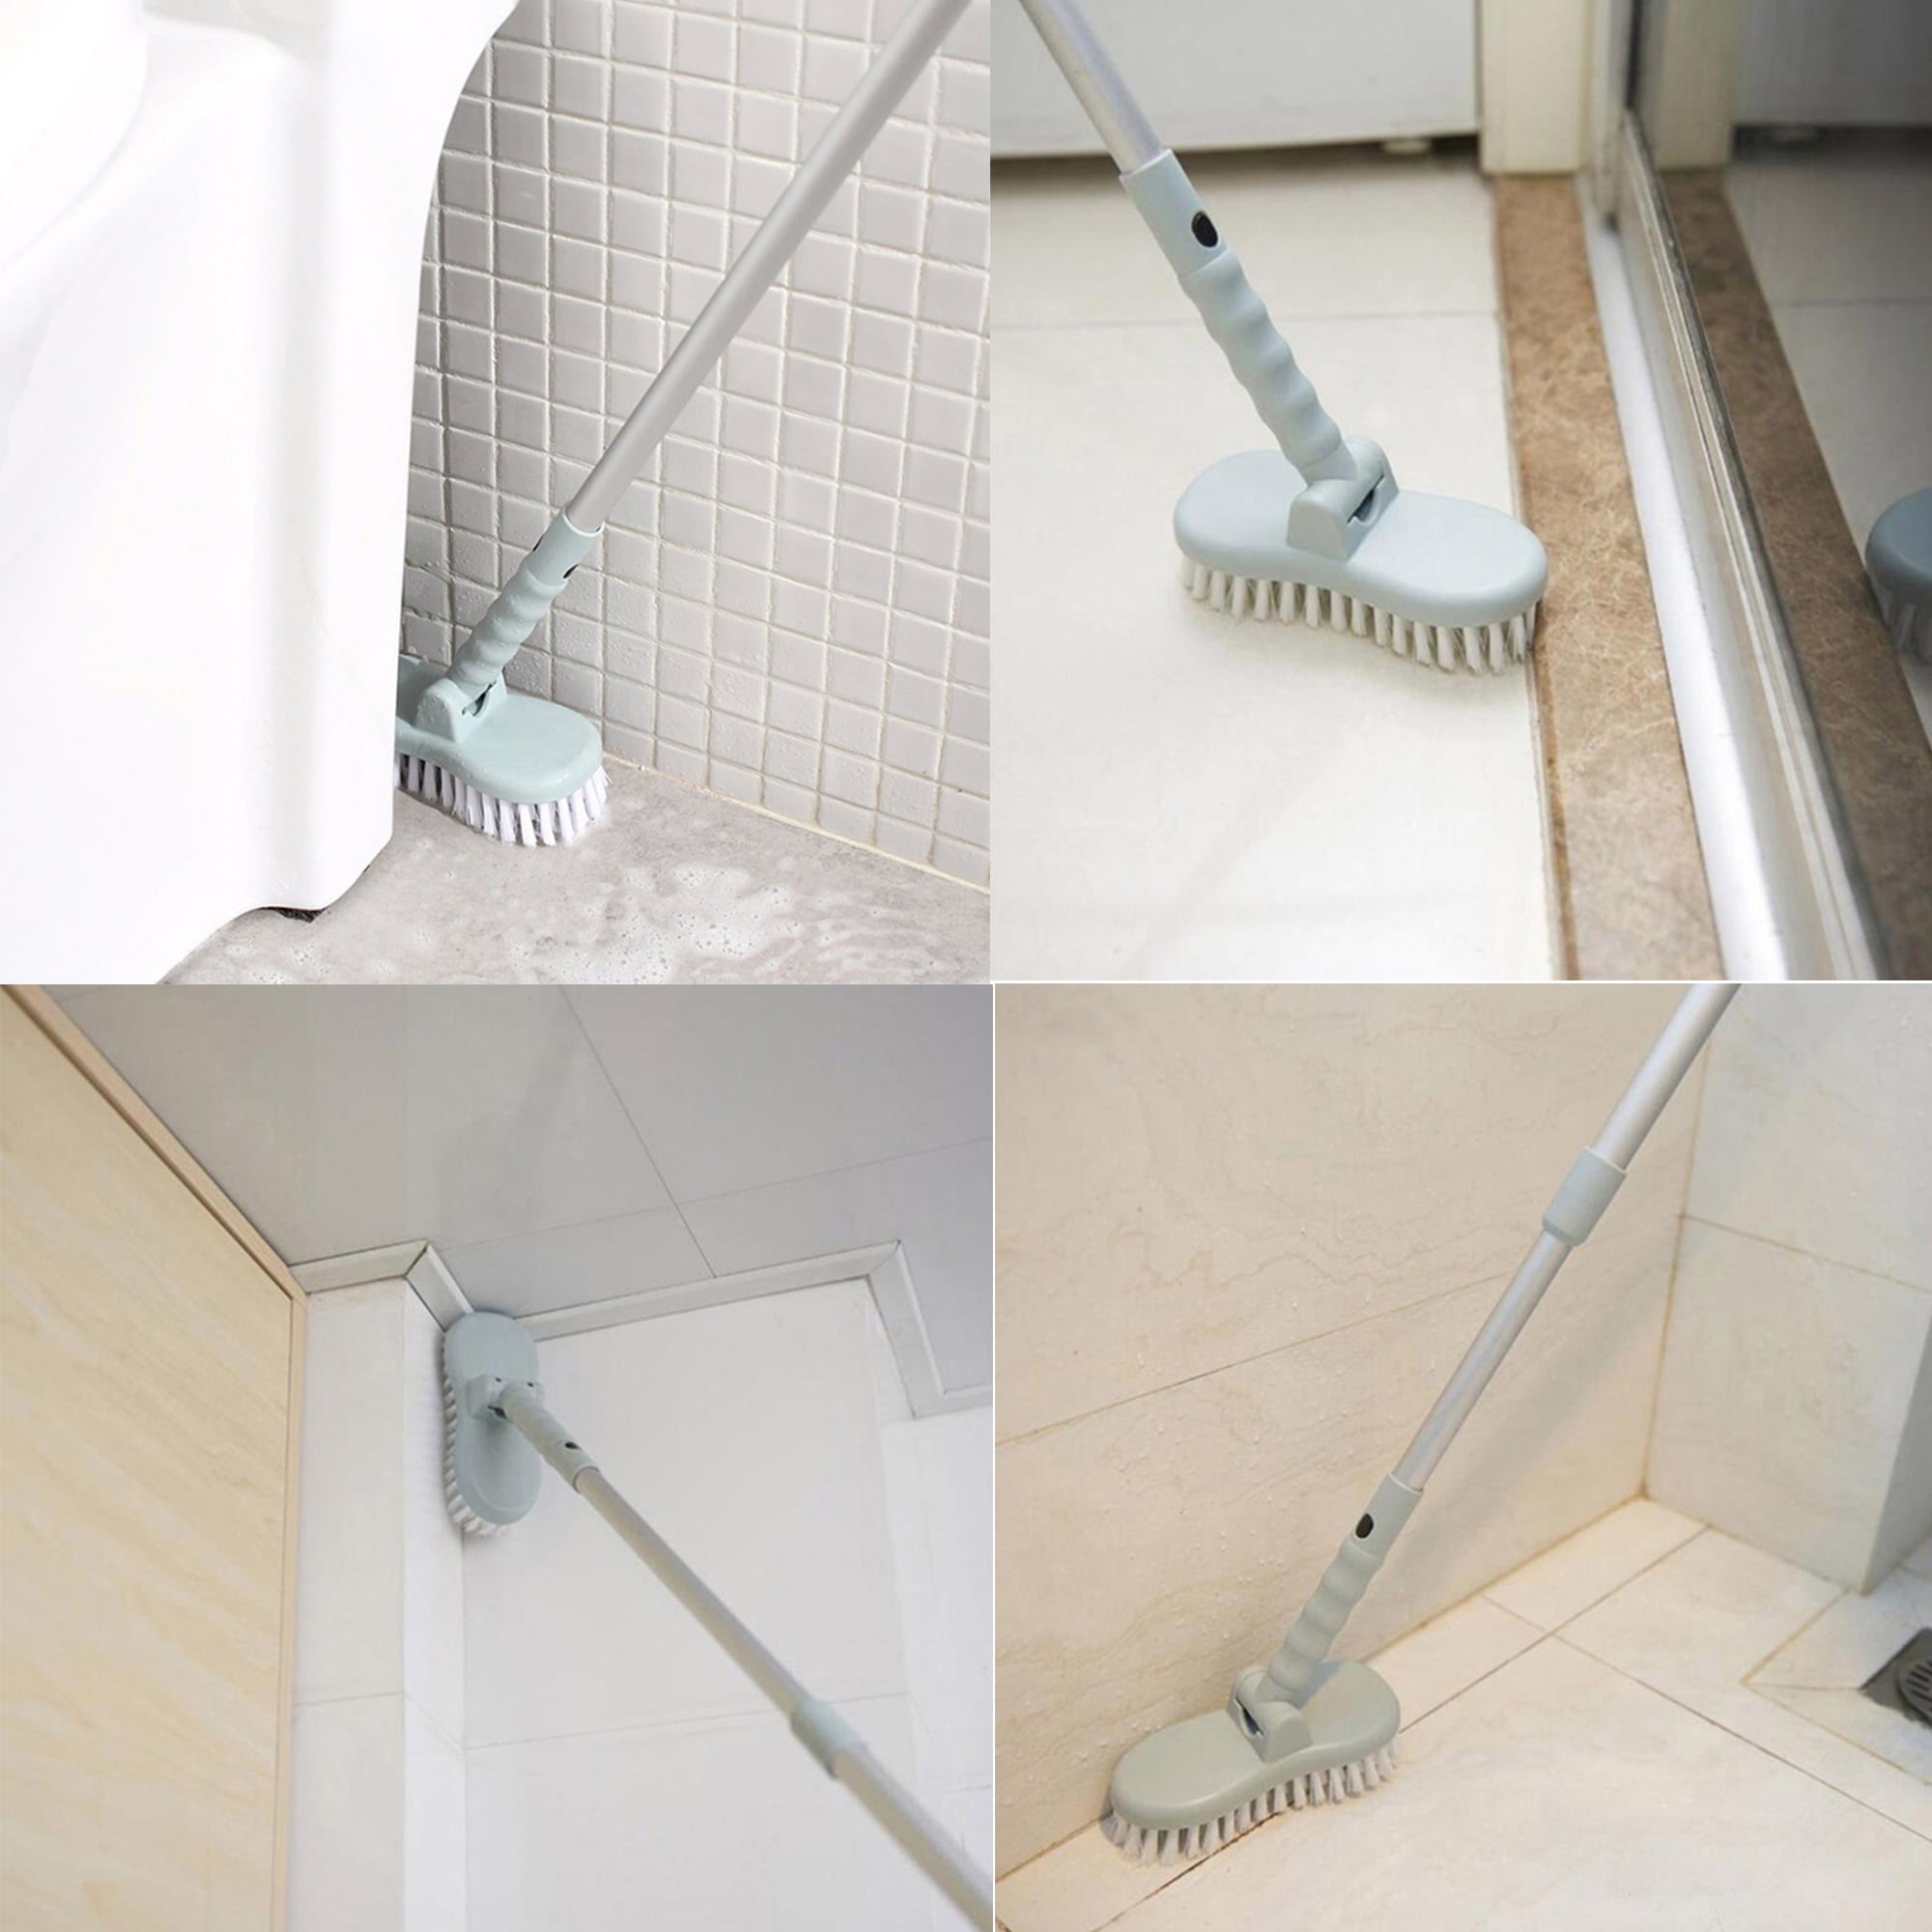 Focussexy Long Handle Scrub Brush Floor Brush Retractable Crevice Floor Bathroom Kitchen Bathroom Corner Cleaning Brush, Blue